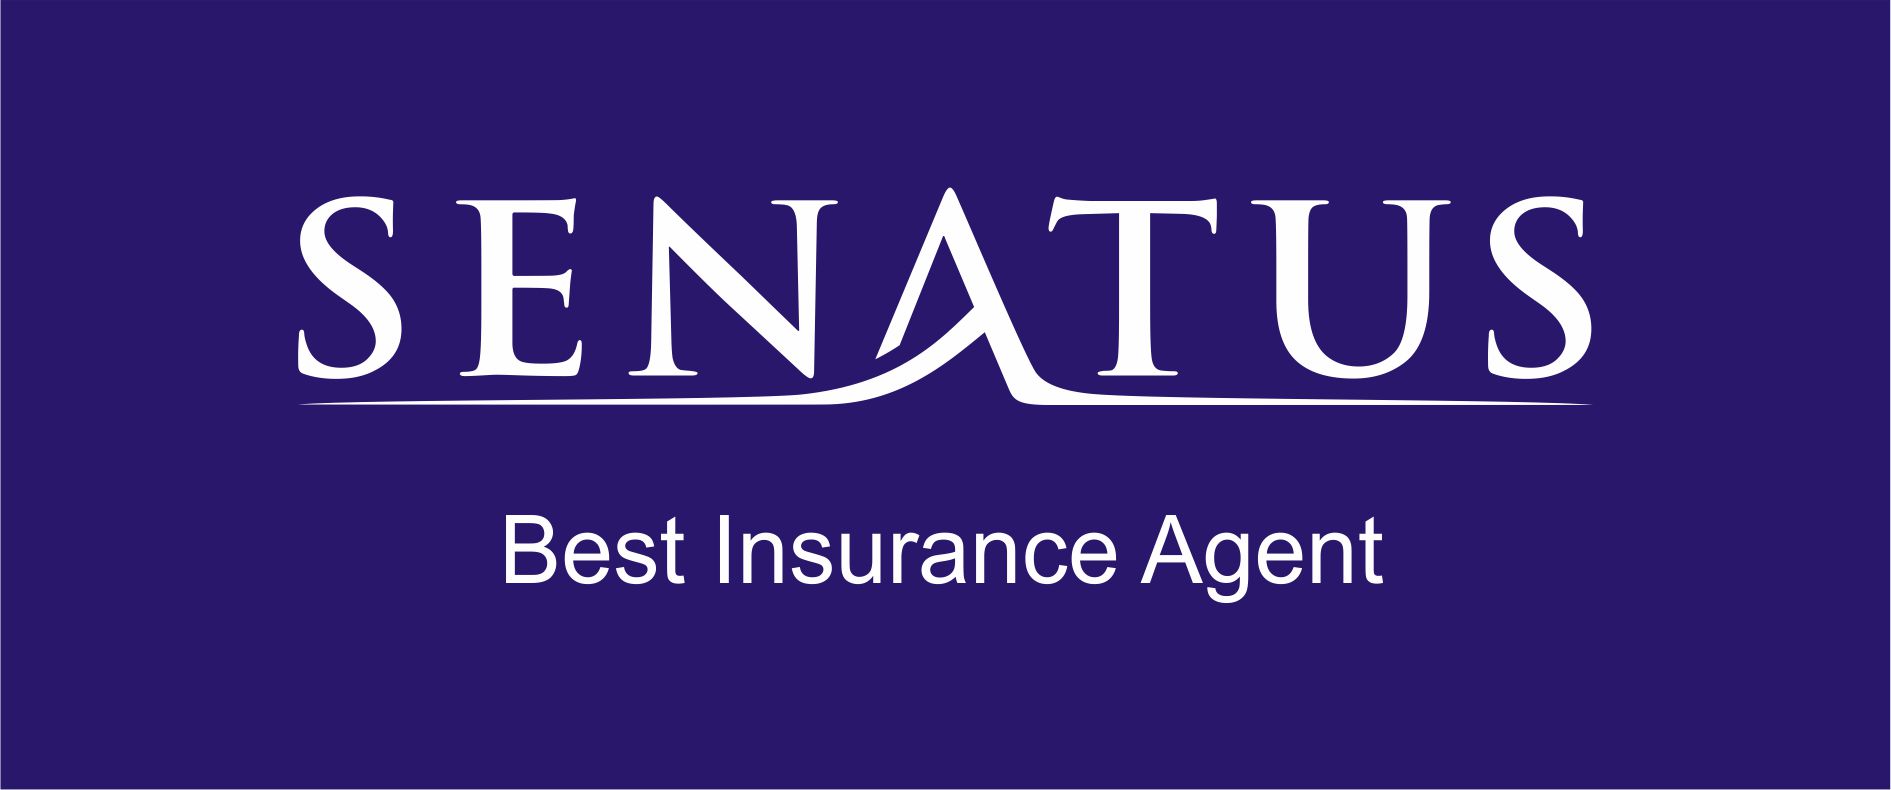 SENATUS Best Insurance Agent – Νο1 Franchise στην Ελλάδα